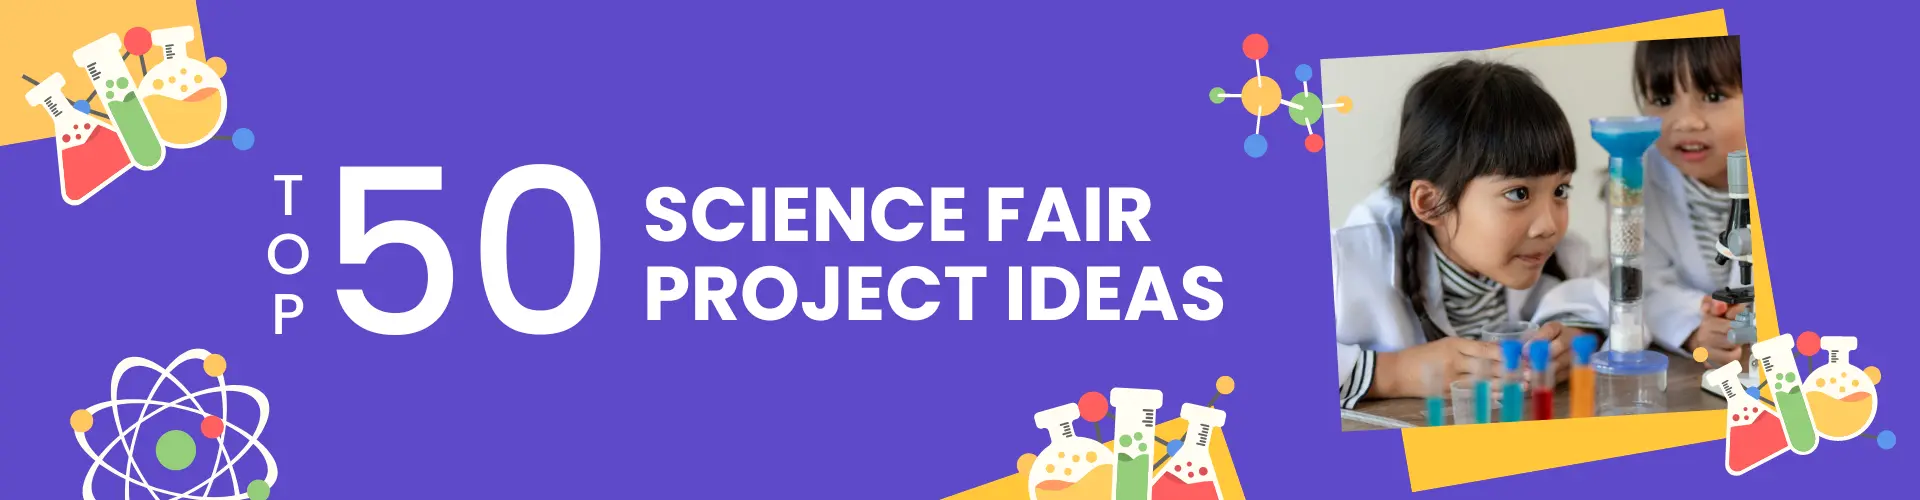 Top 50 Science Fair Project Ideas